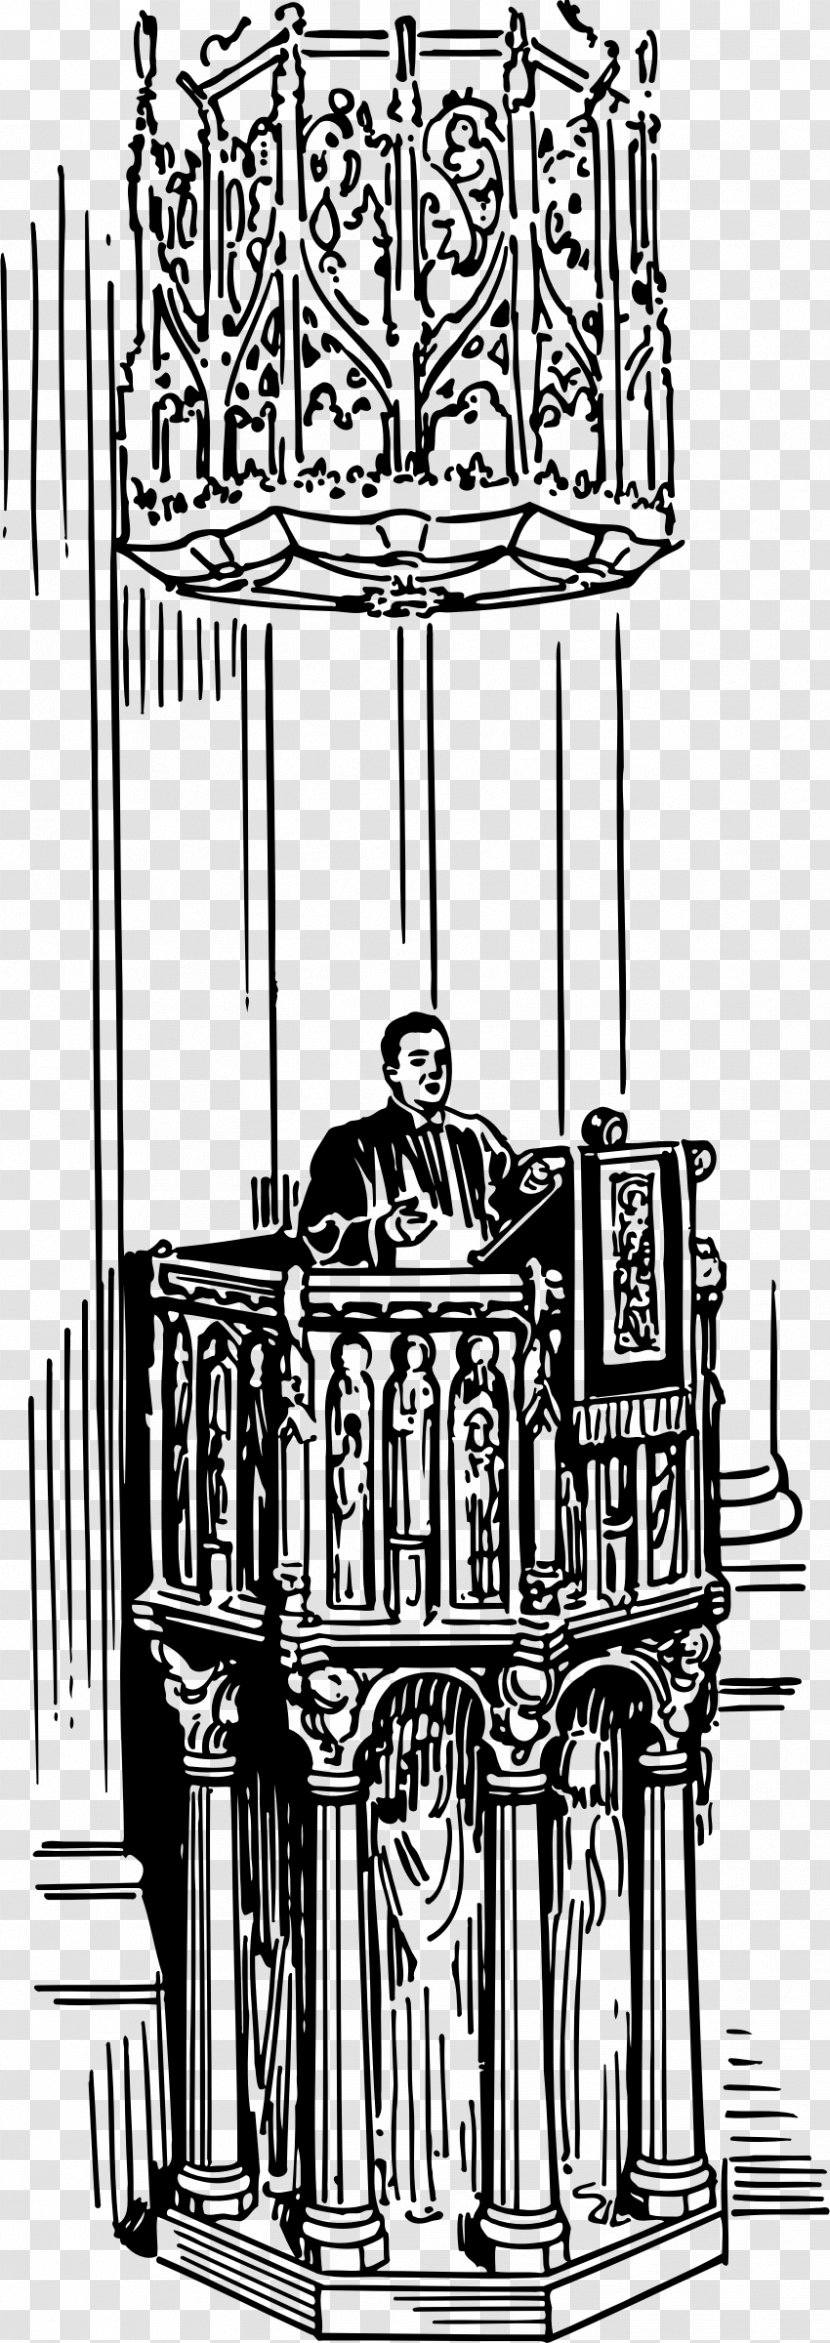 Pulpit Preacher Church Clergy Clip Art - Black And White Transparent PNG